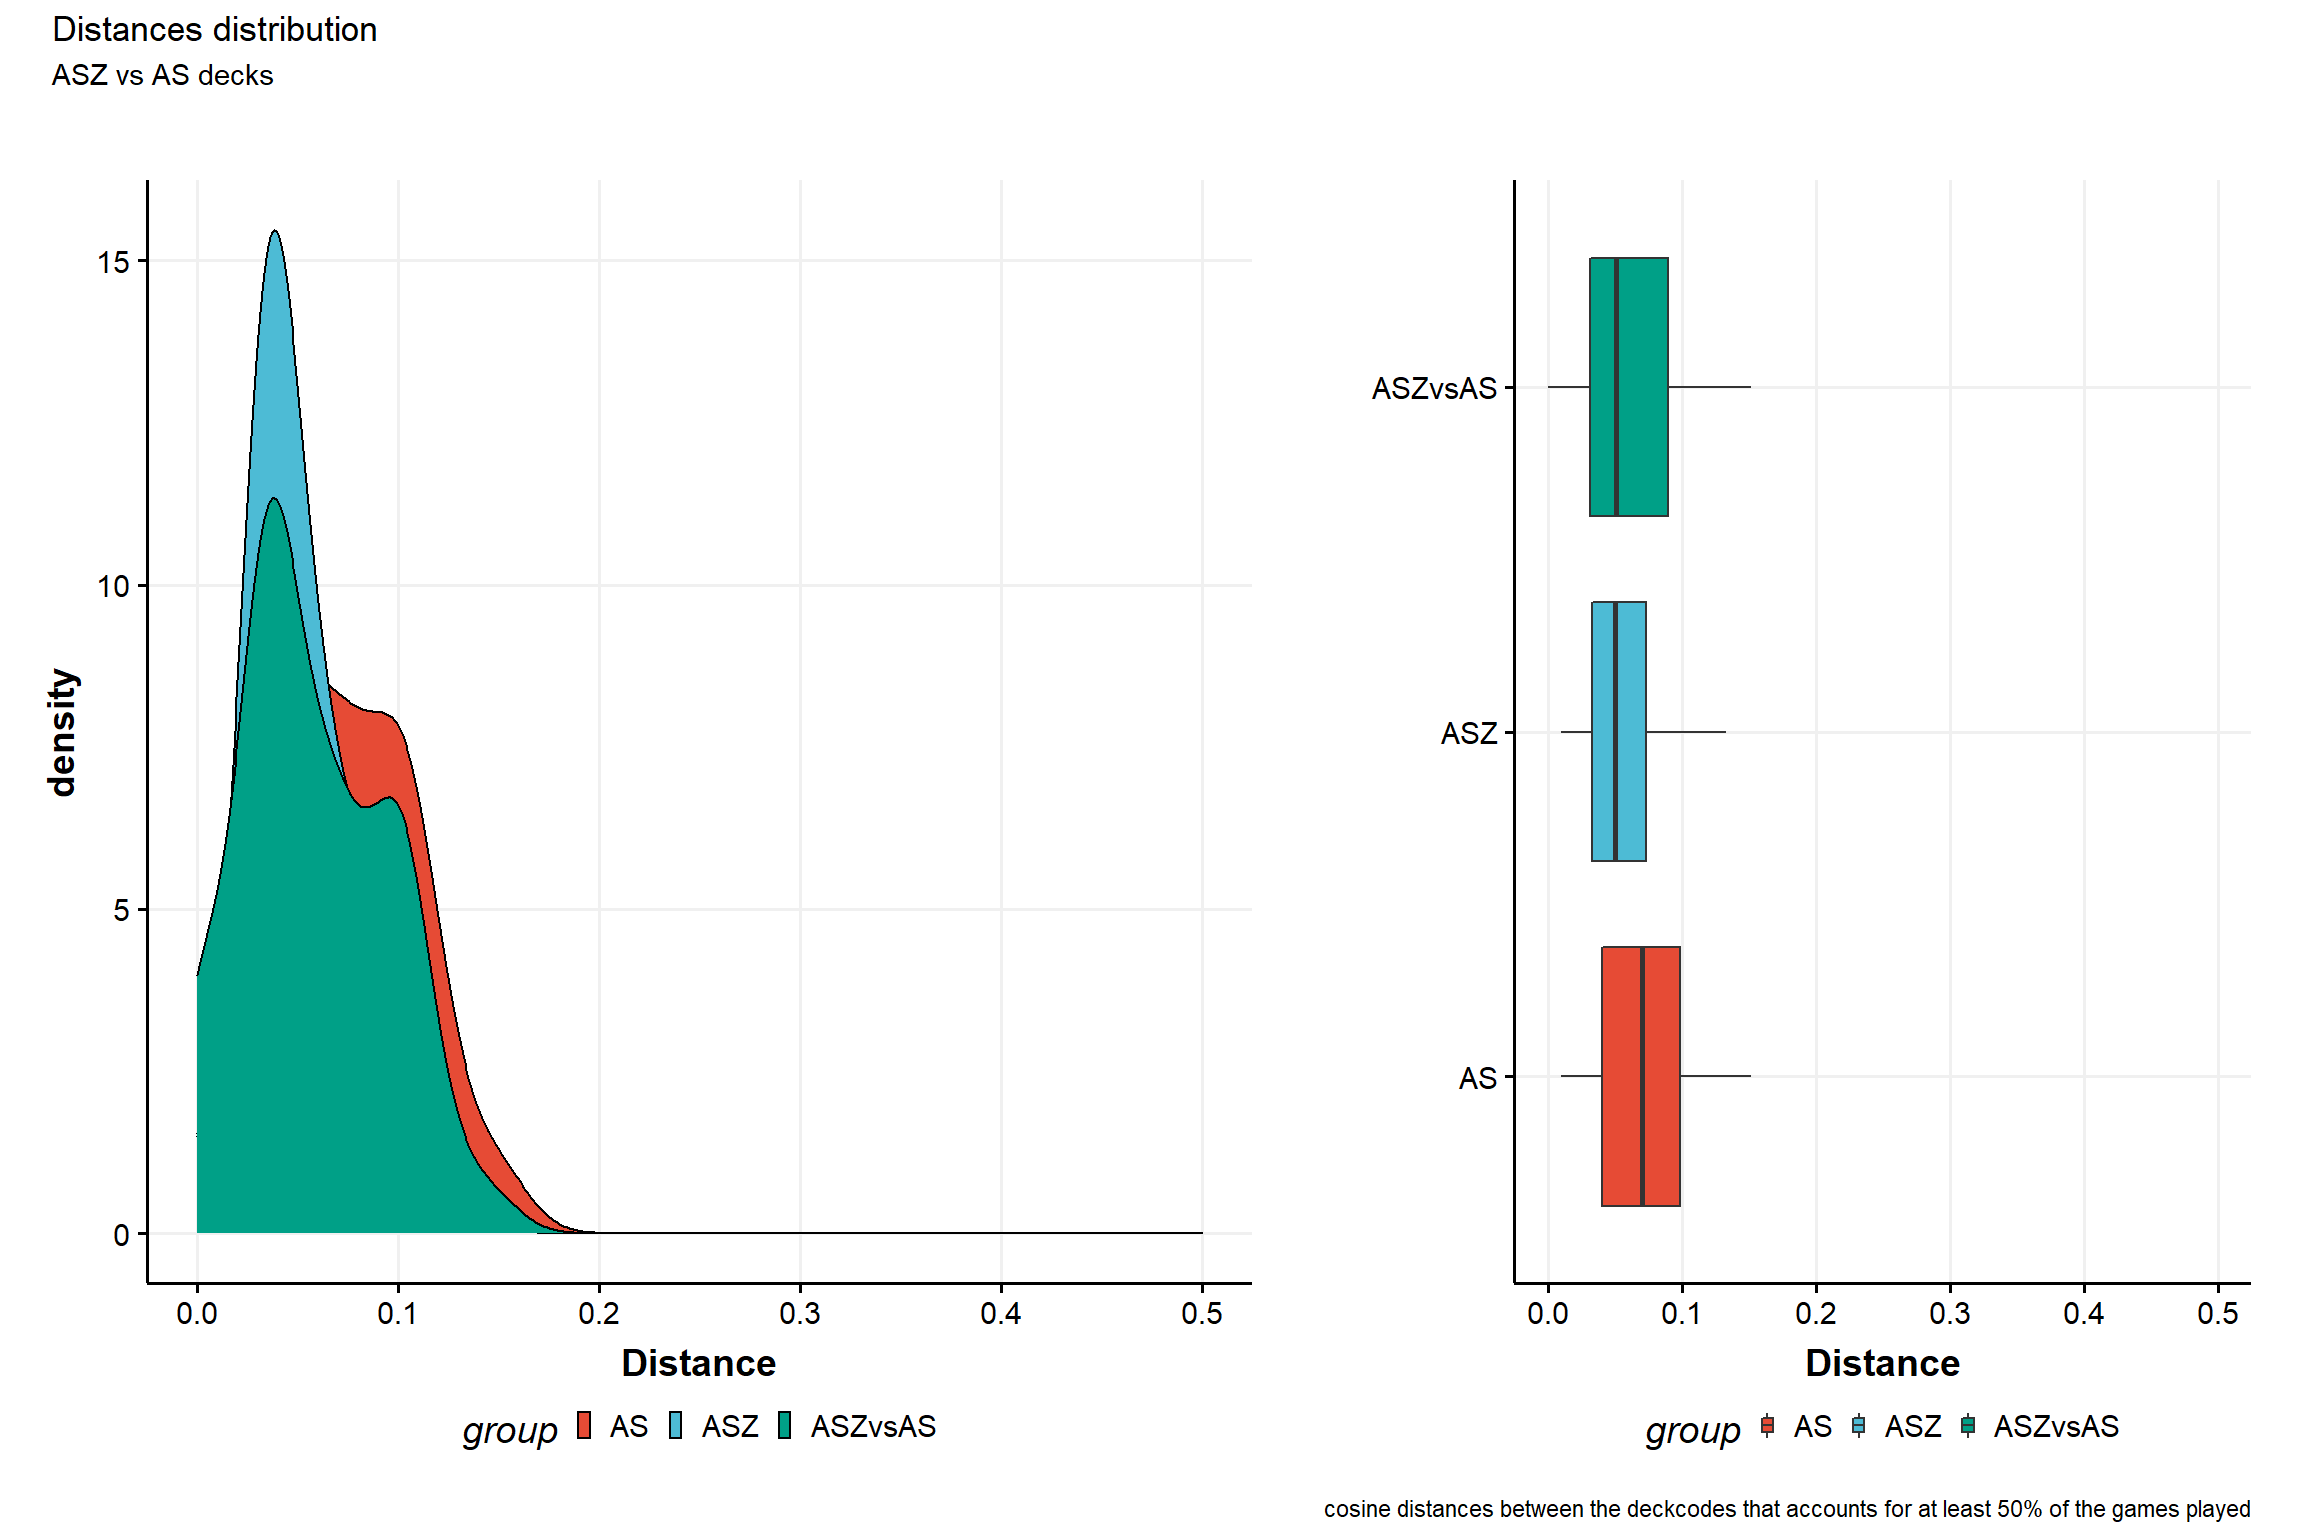 distribution of cosine distances for ASZ vs AS decks